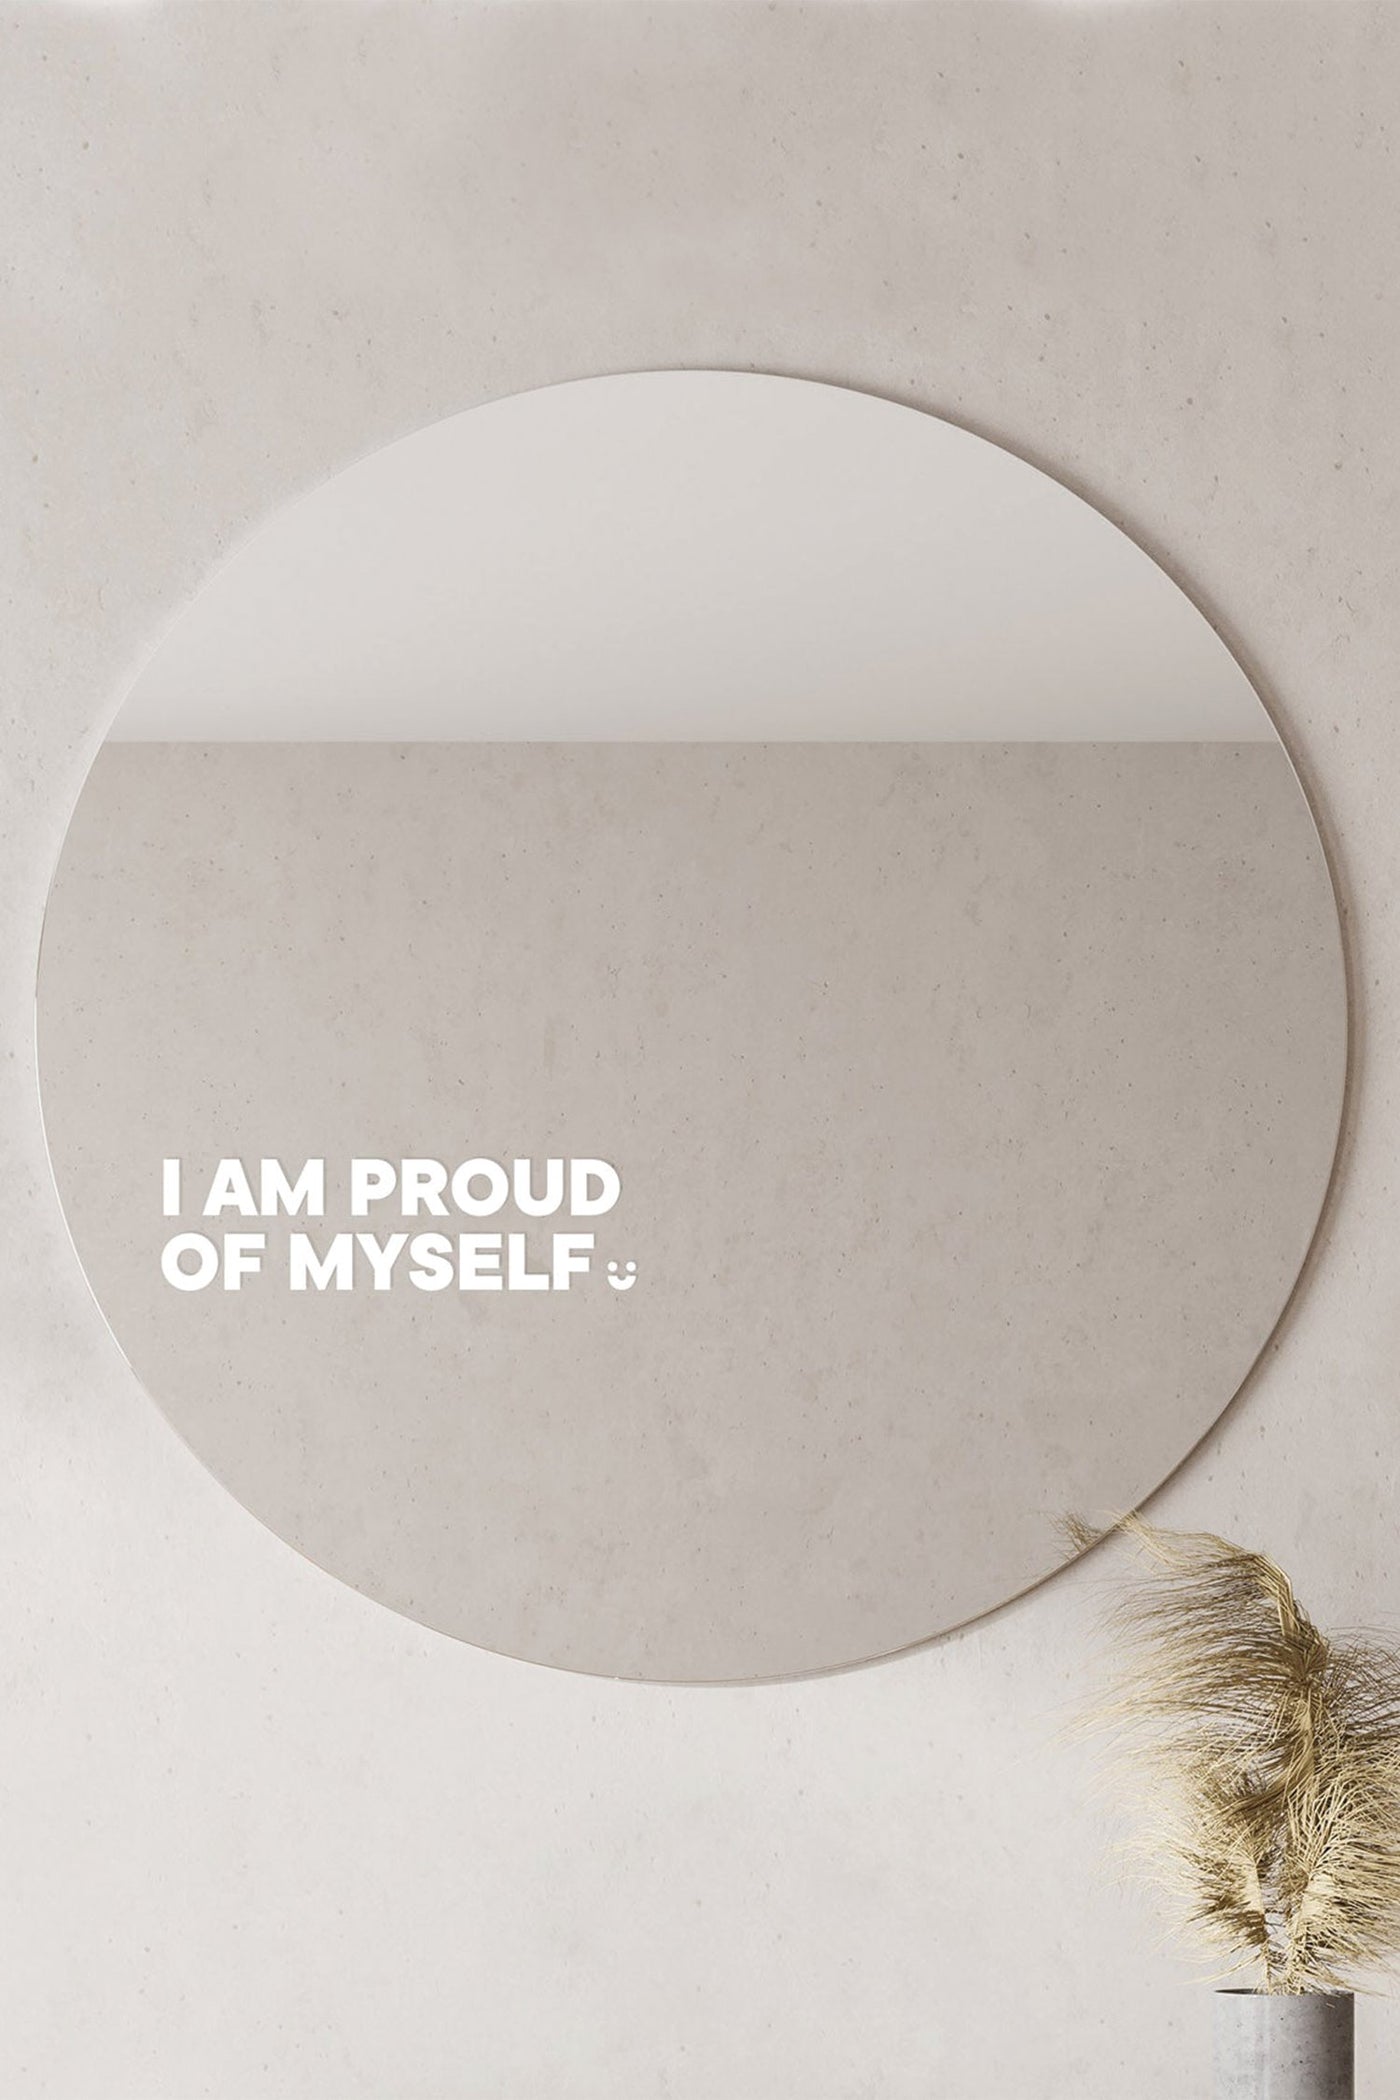 I AM PROUD OF MYSELF. - Affirmation Mirror Sticker Affirmation Stickers Selfawear 